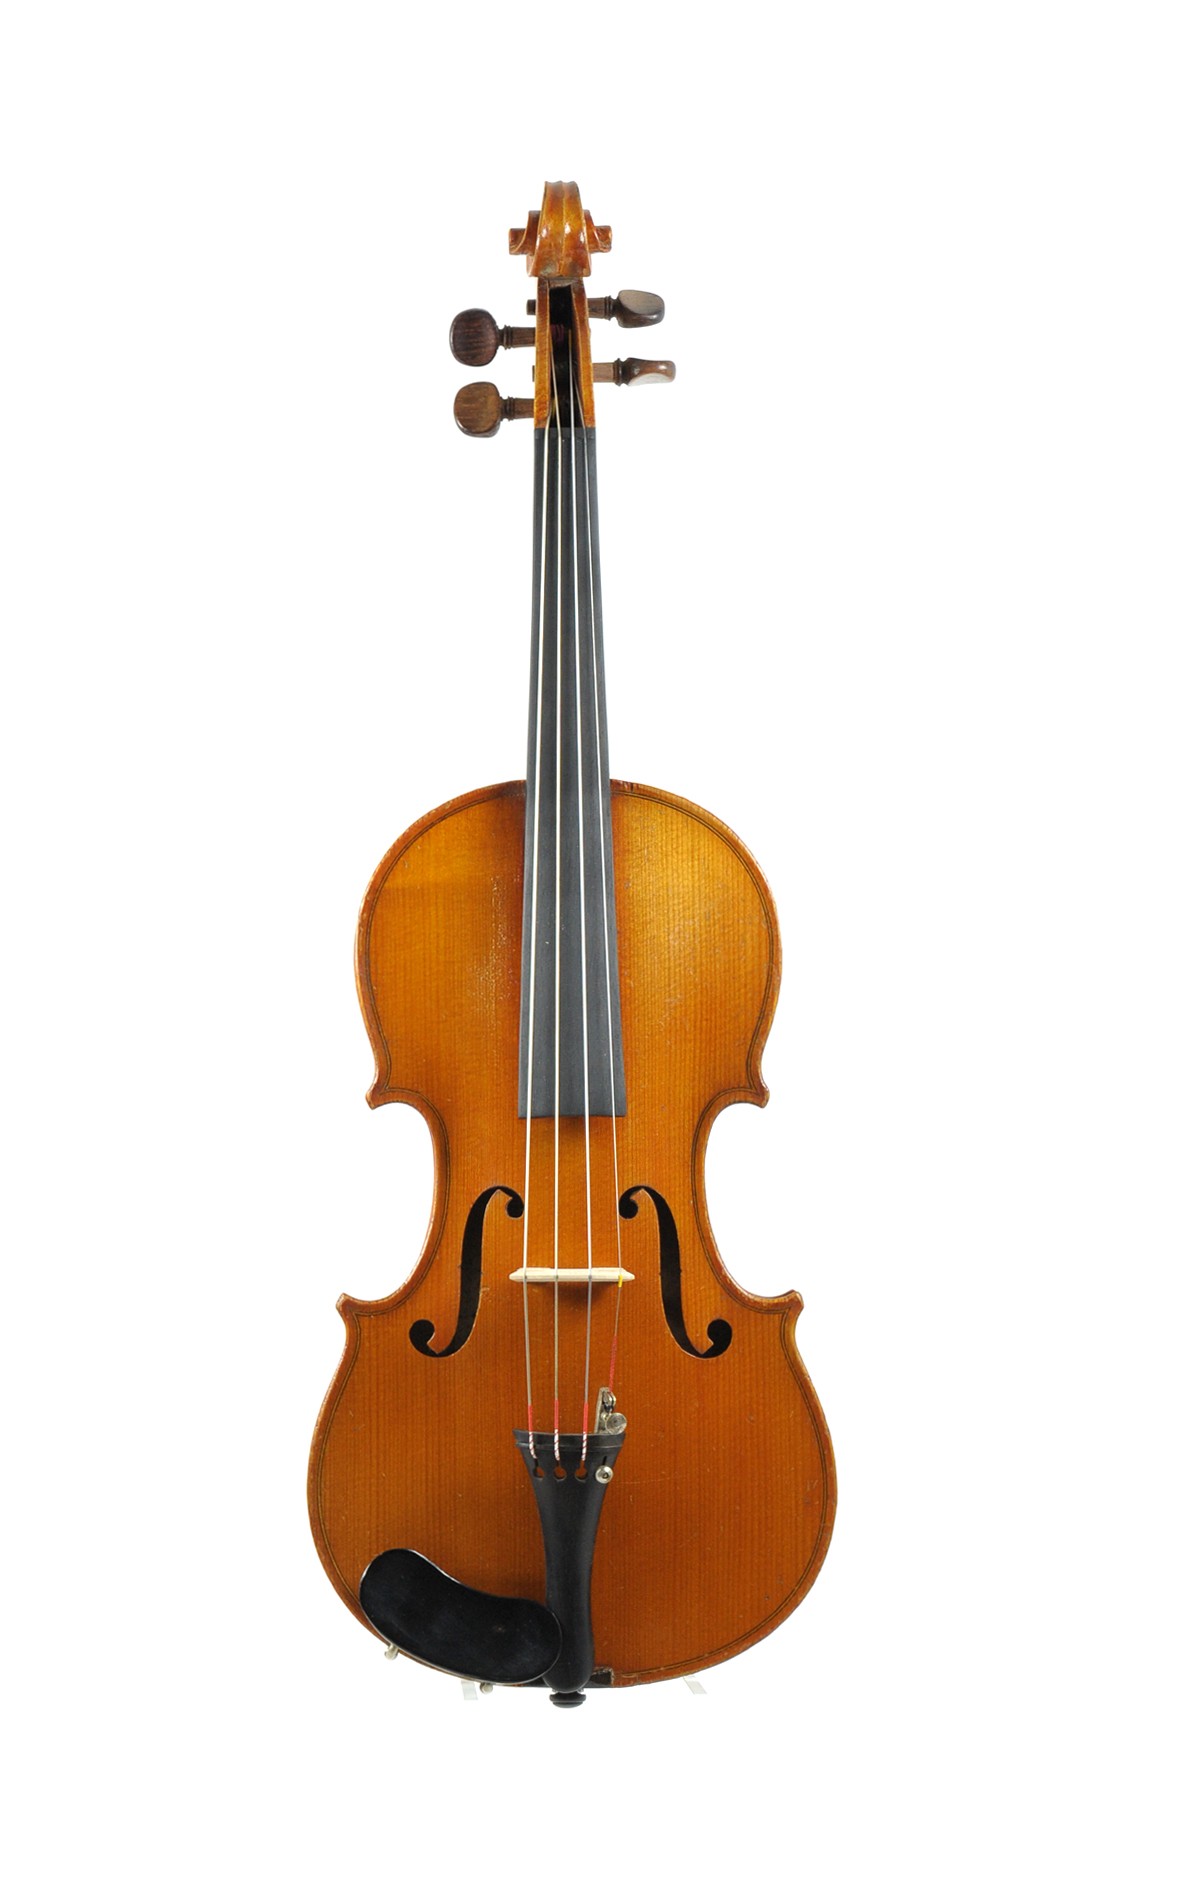 Mansuy Mirecourt rare 1/2 violin - top